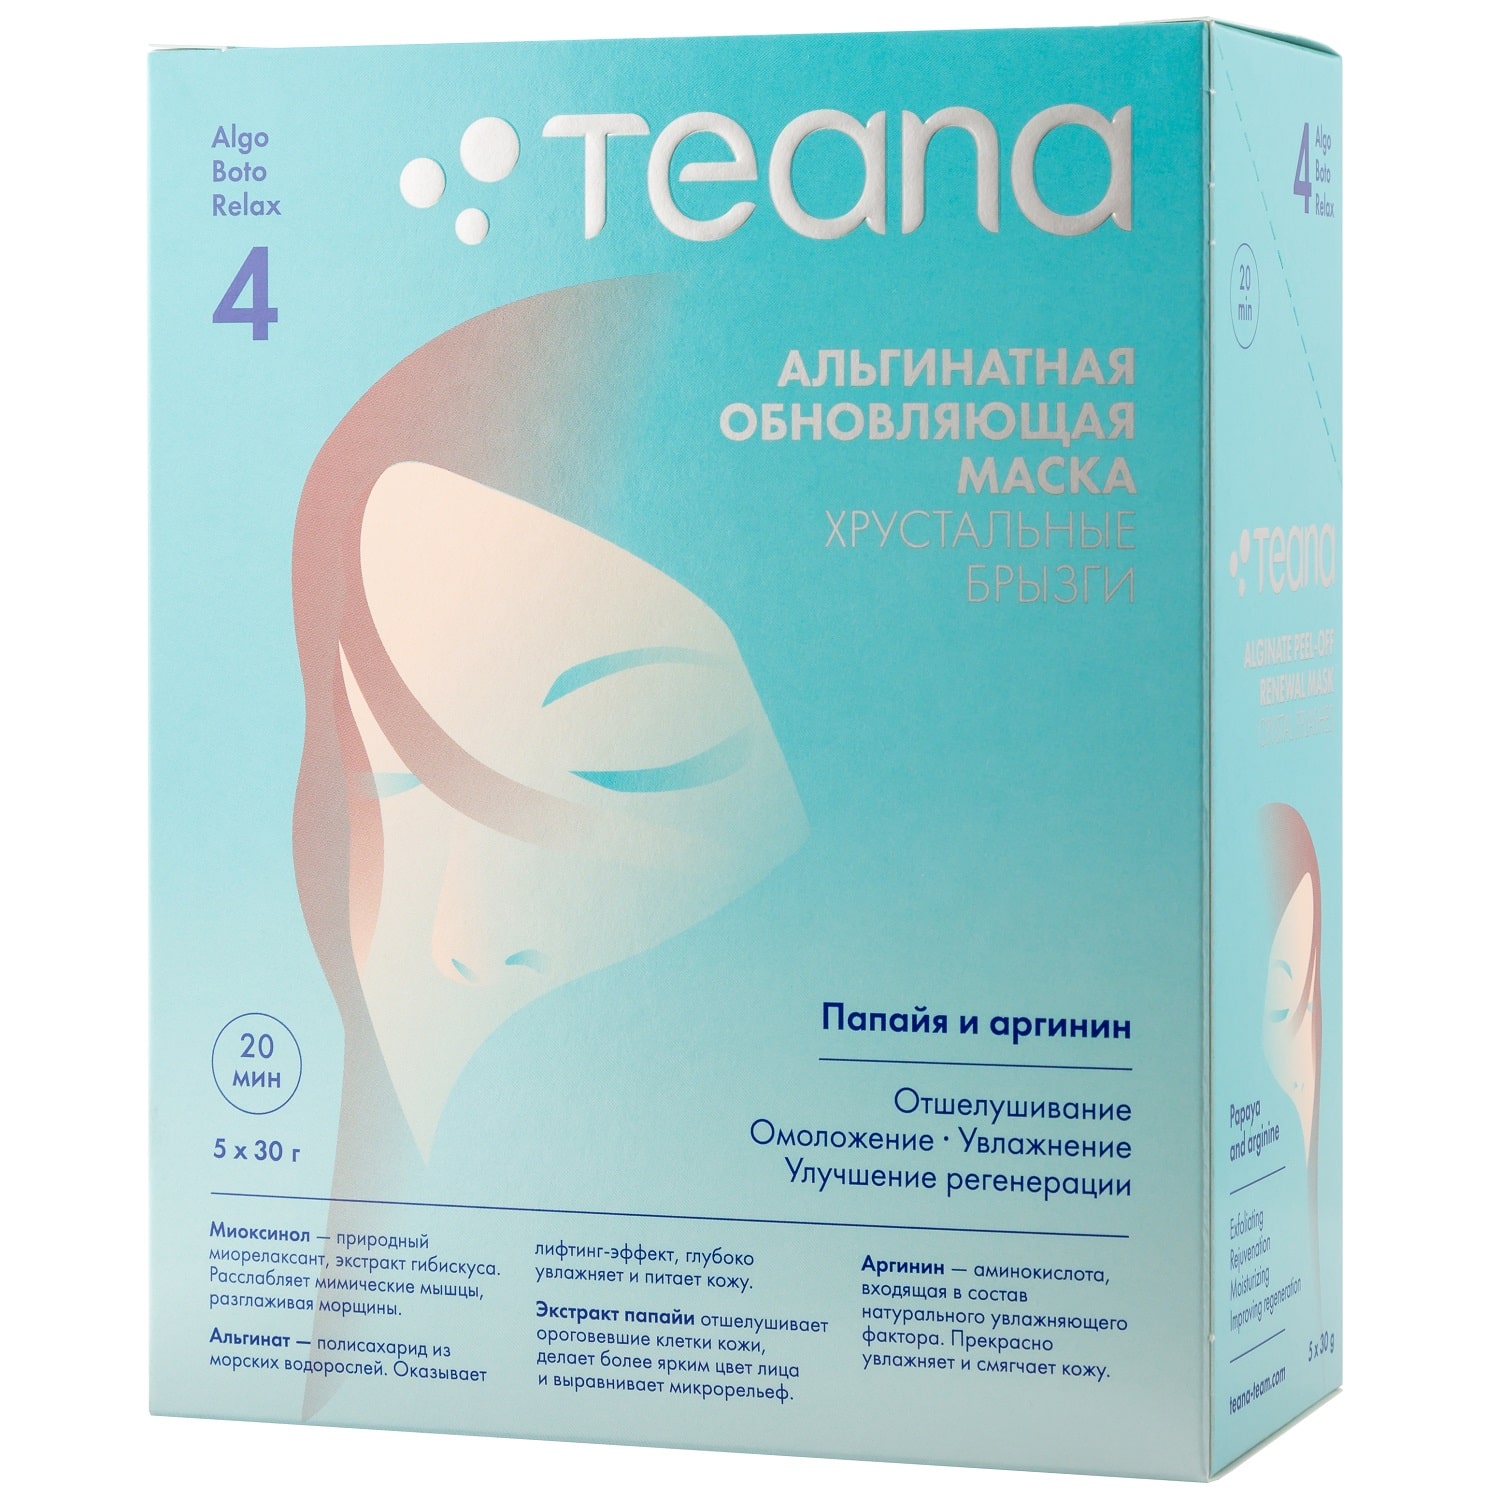 Teana Альгинатная Очищающая маска Хрустальный веер брызг 30х5 гр (Teana, AlgoBotoRelax)